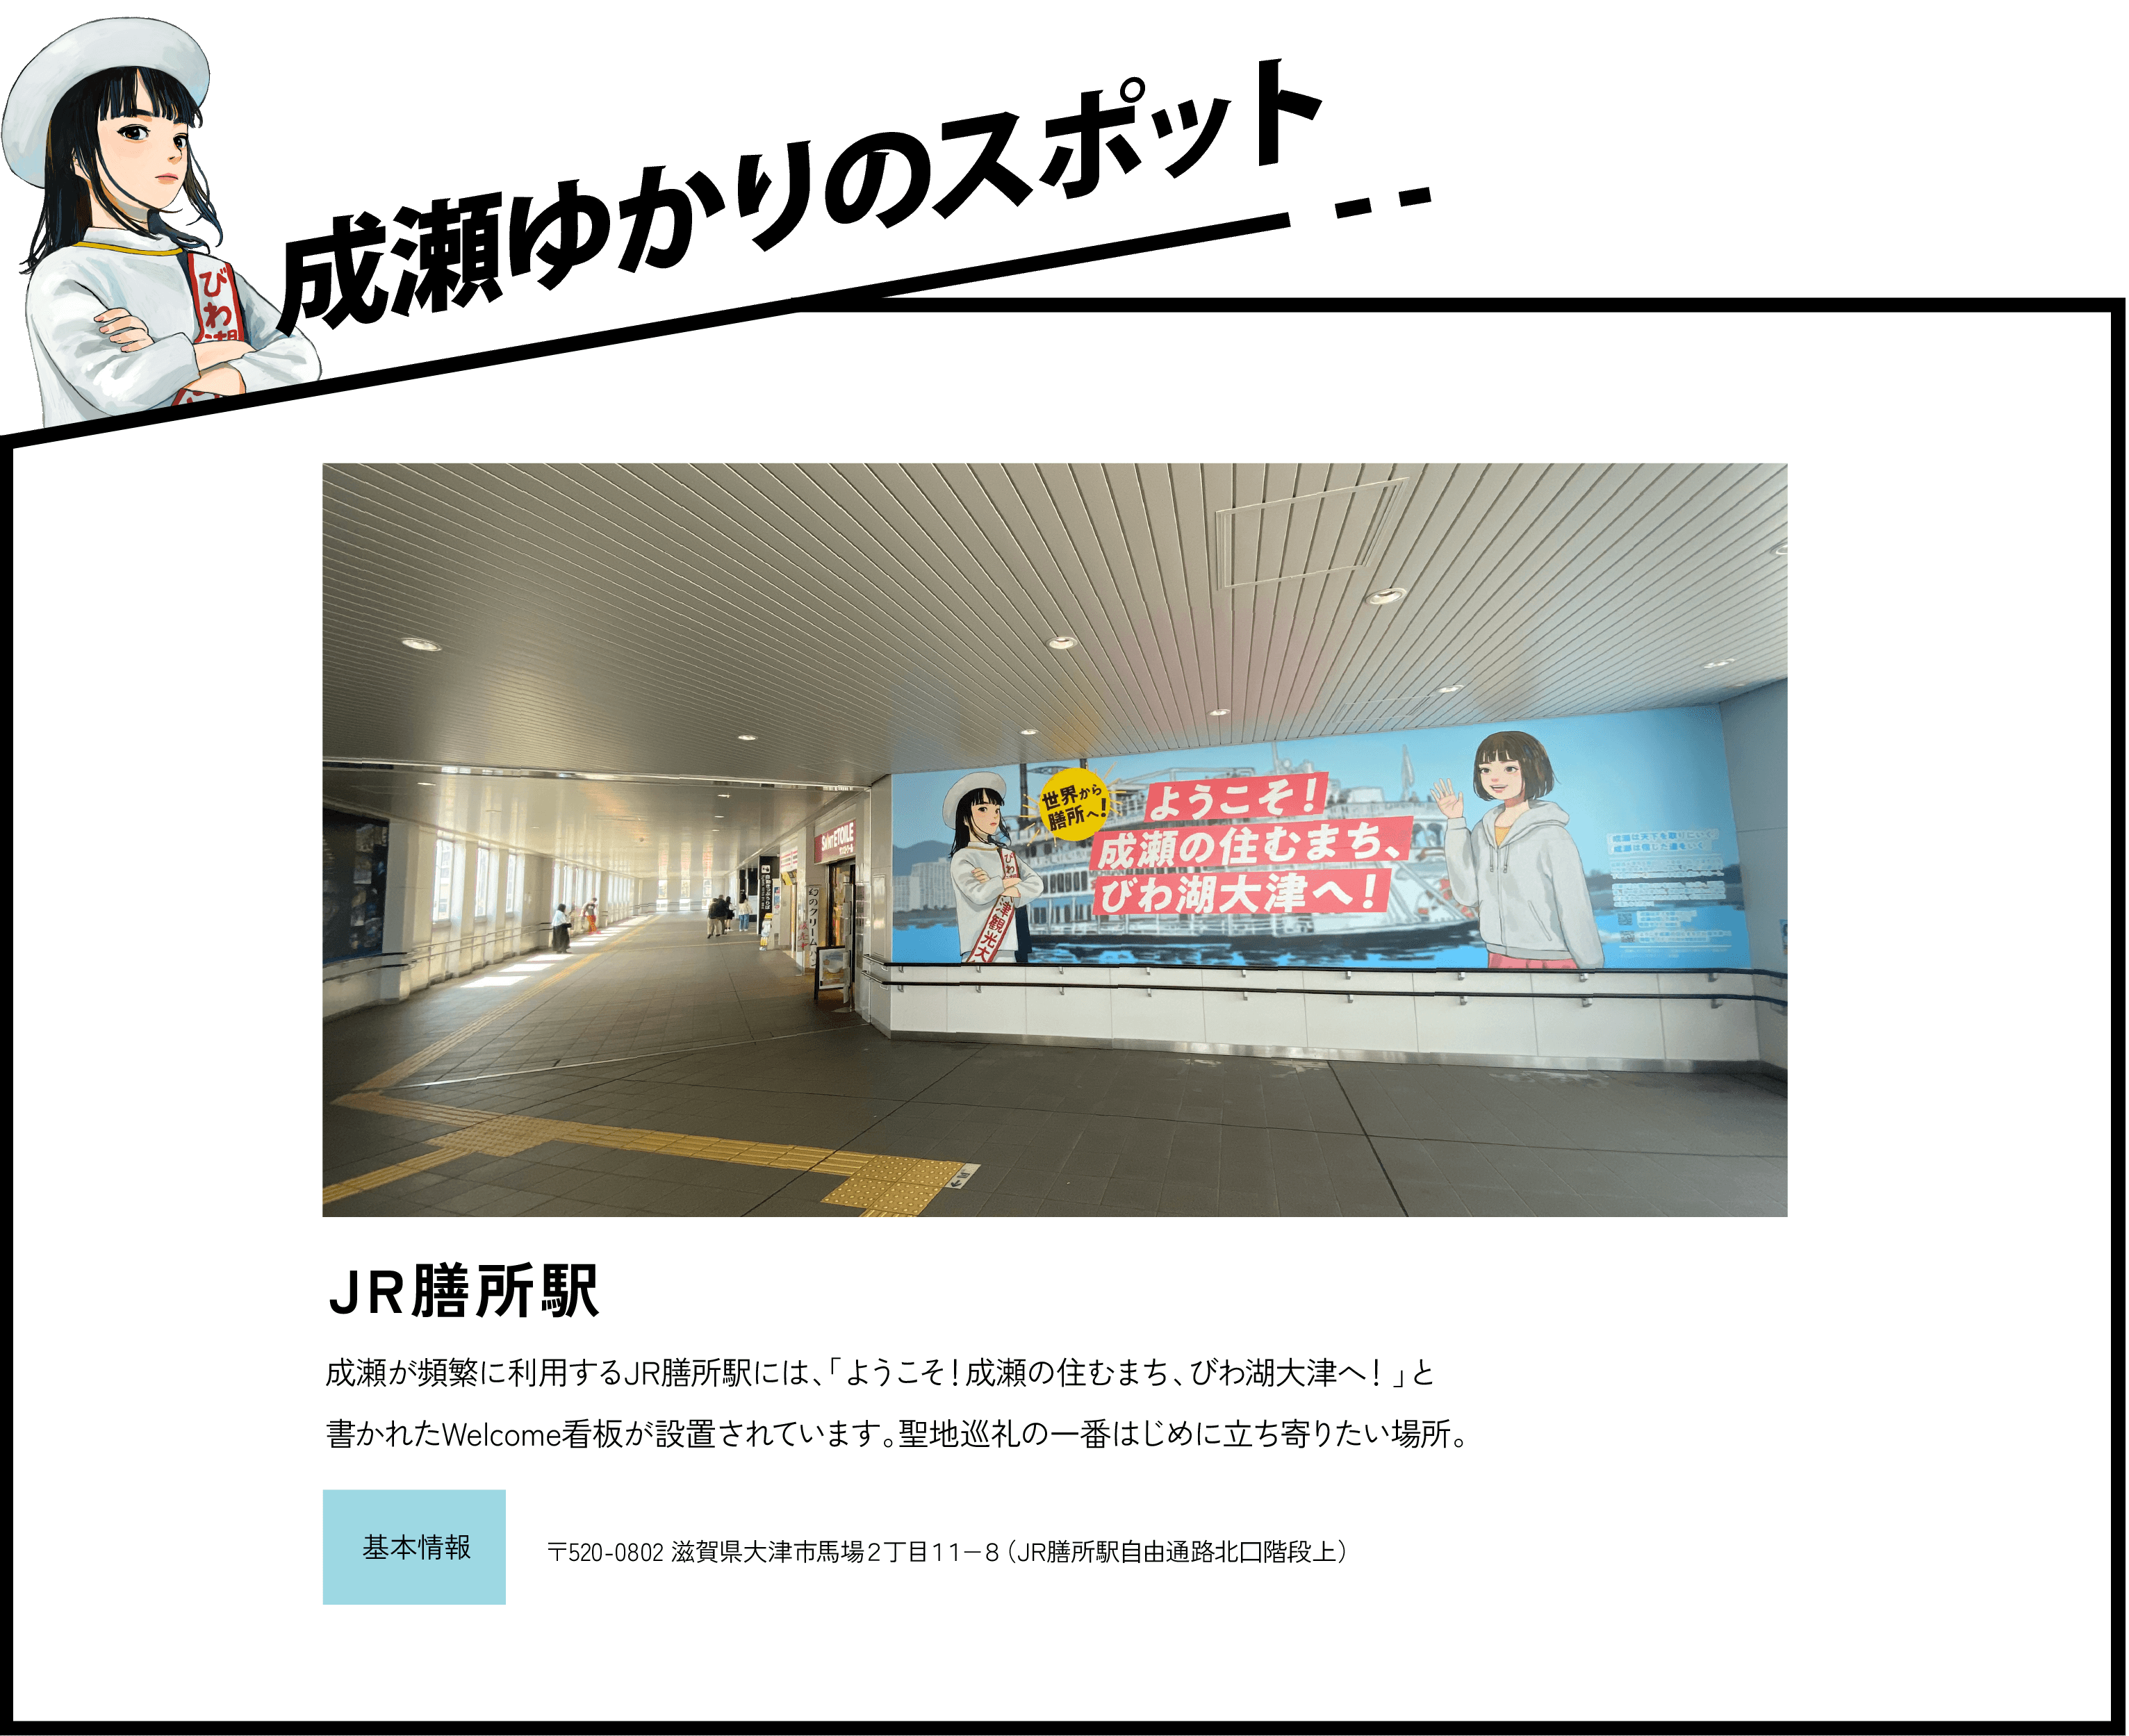 JR膳所駅の情報